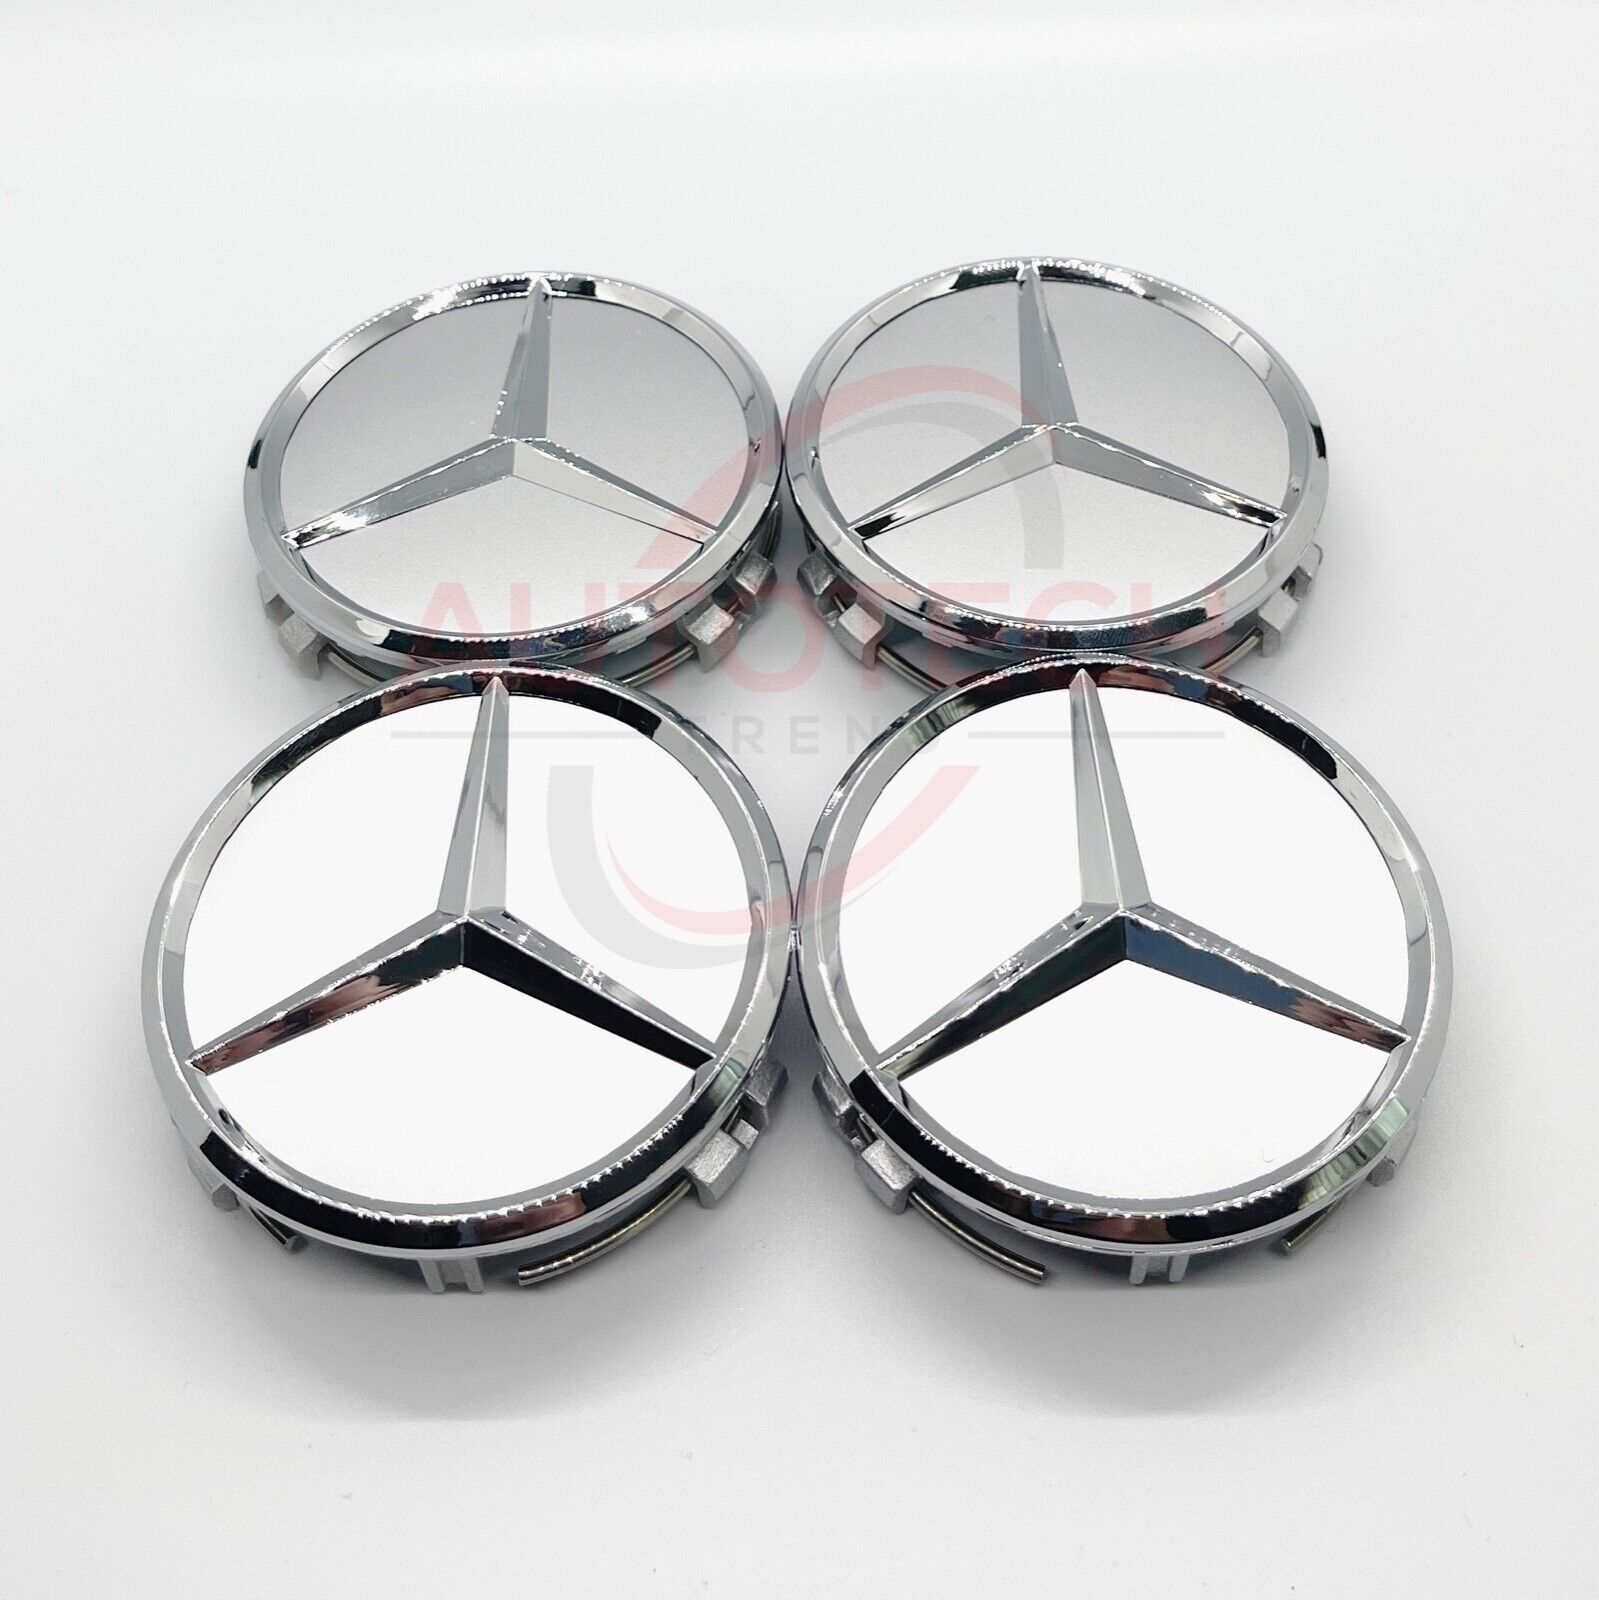 Set of 4 Mercedes-Benz Silver/Chrome Wheel Center Caps - 75MM AMG WREATH